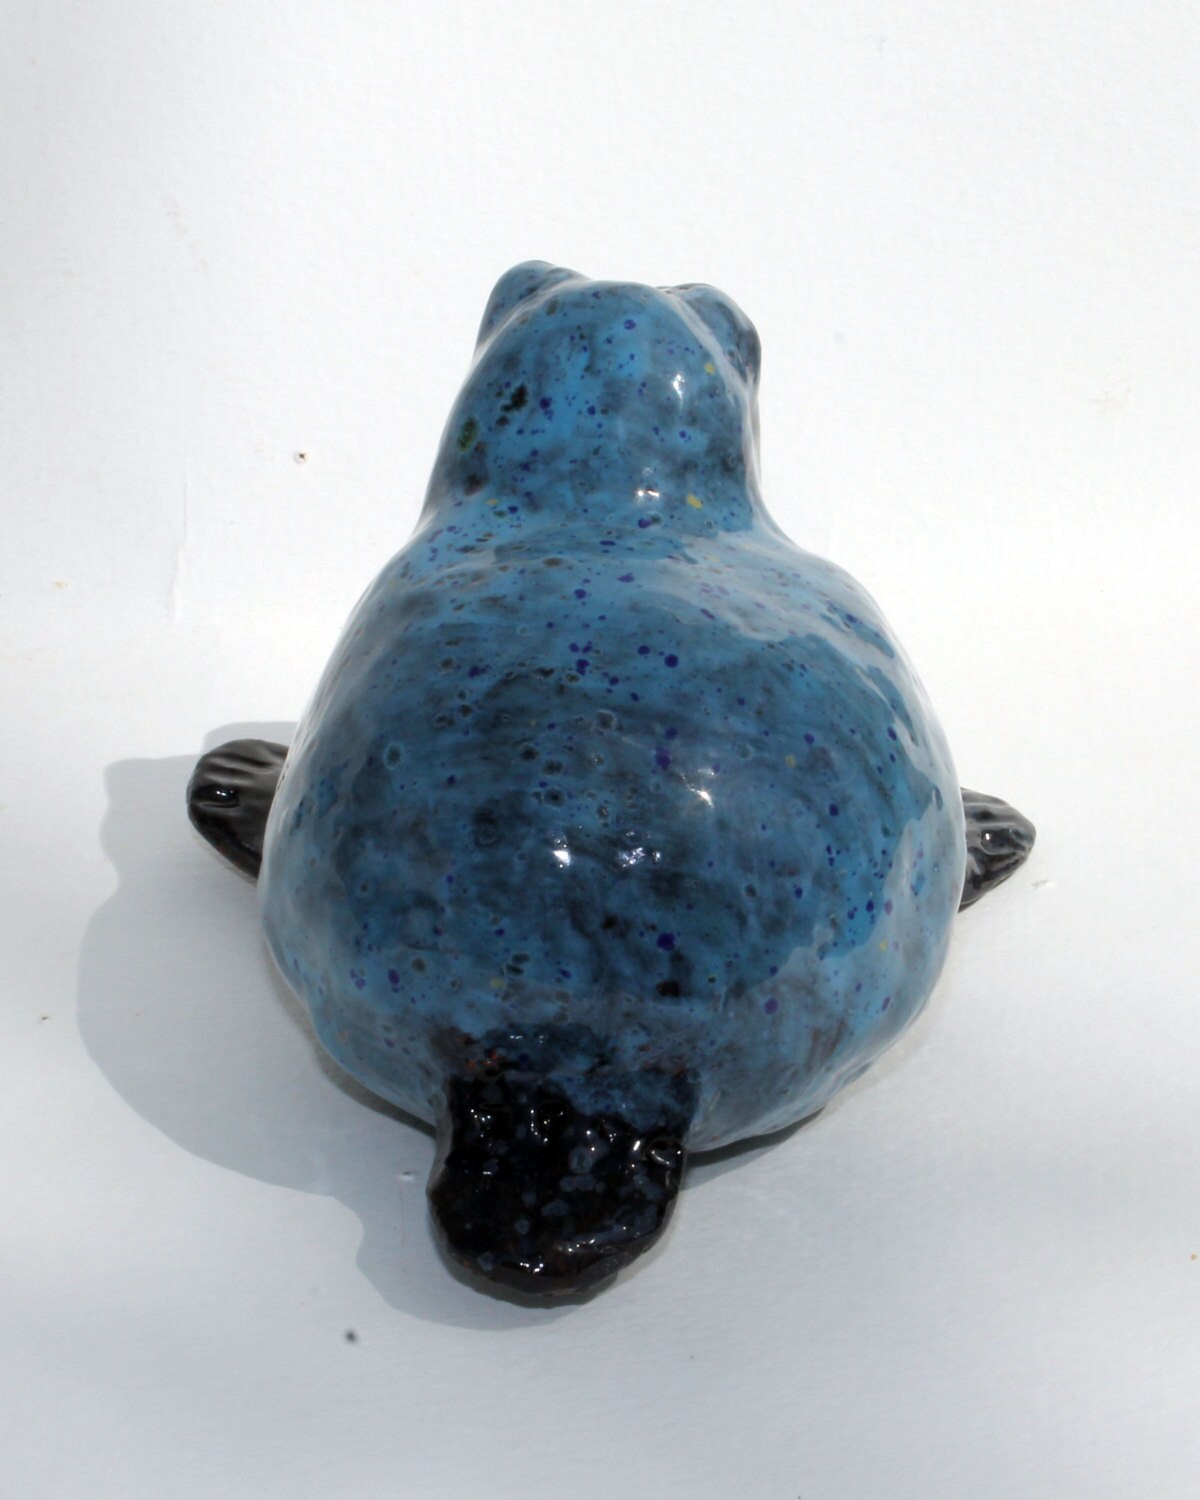 Sadie the Seal ceramic Figurine | Etsy